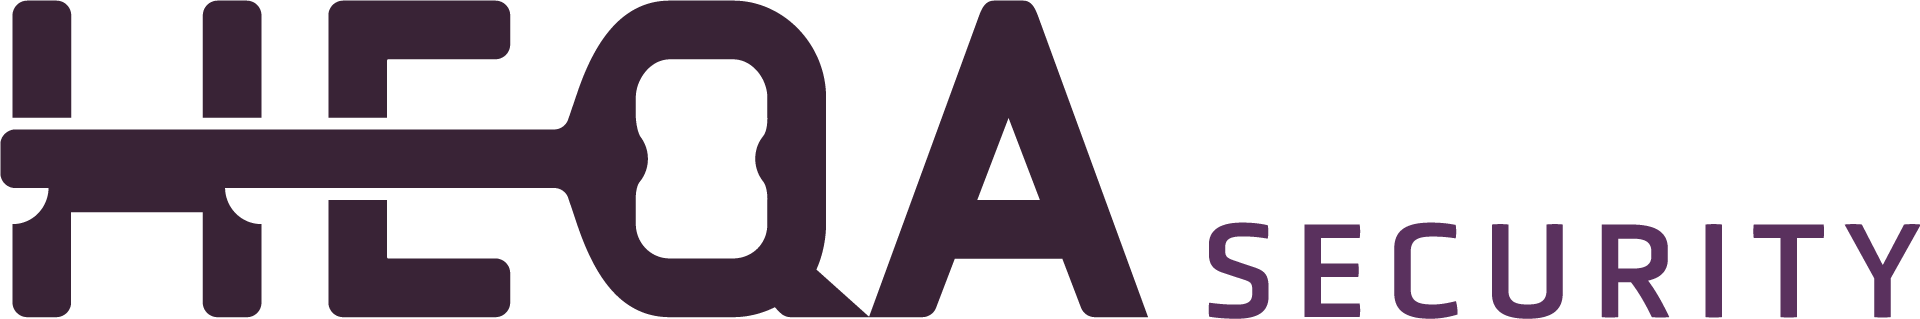 HEQA Security logo